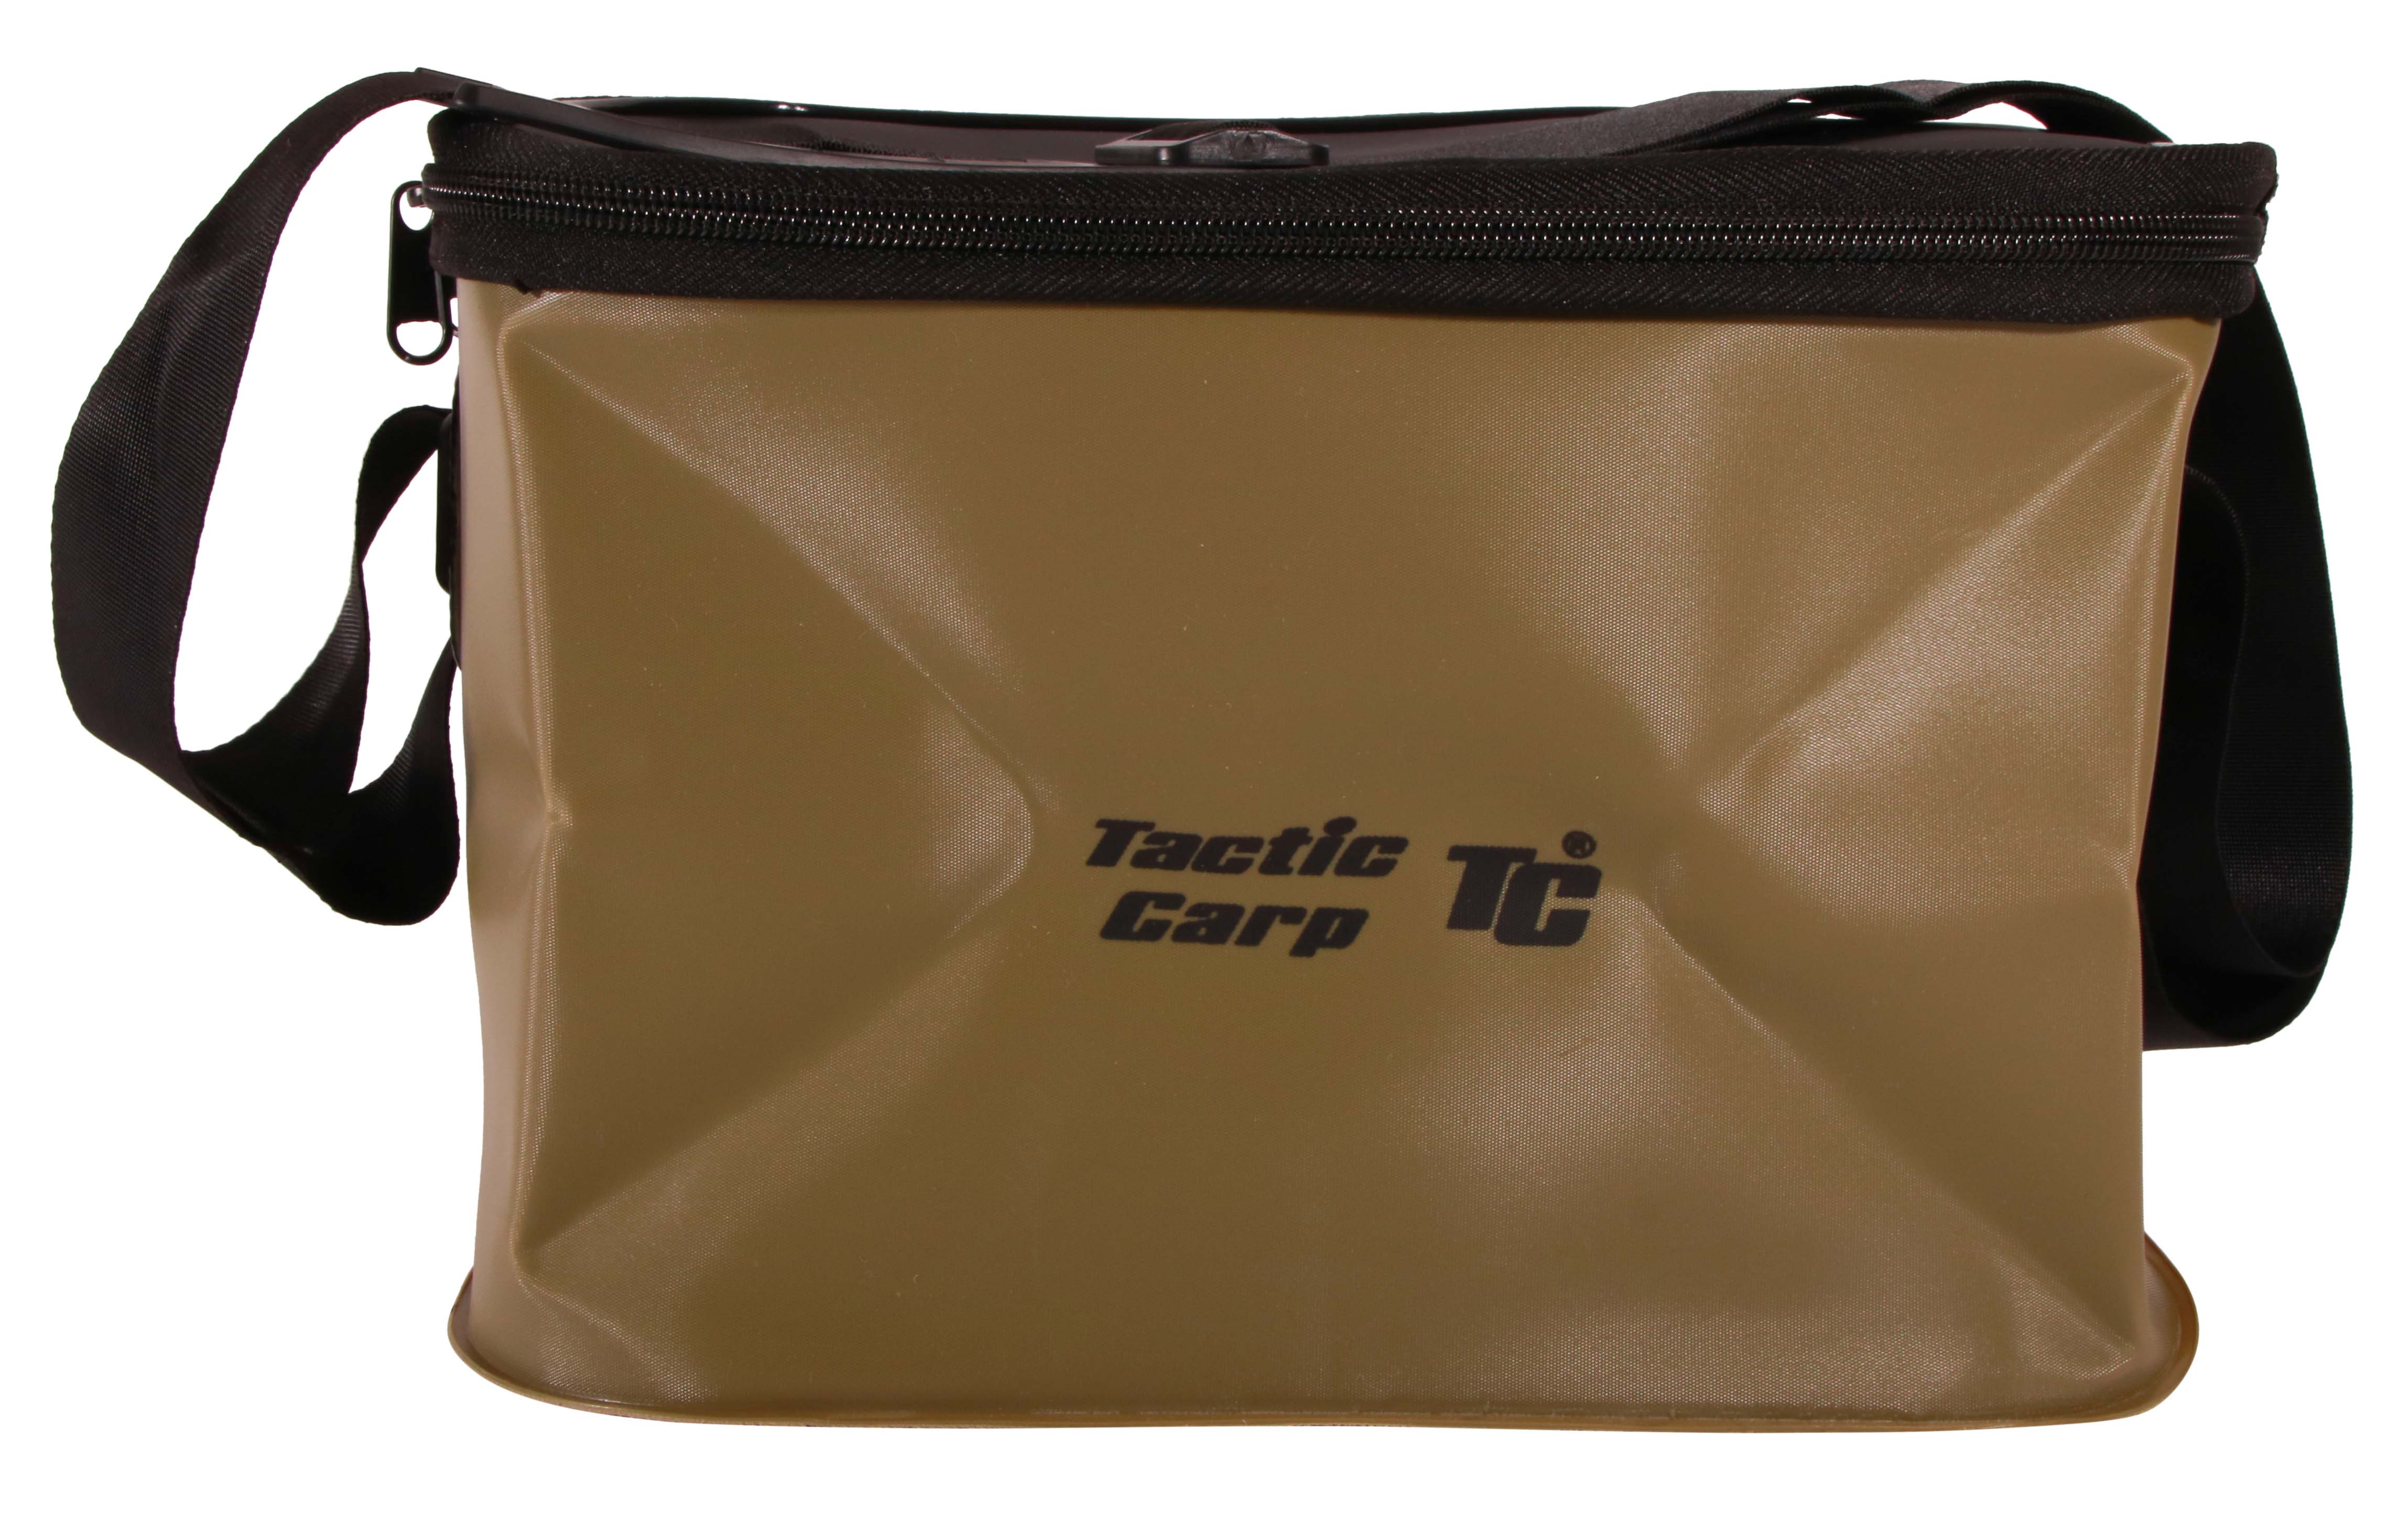 Sacs étanches Tactic Carp Waterproof Luggage Waterproof Bags - Small